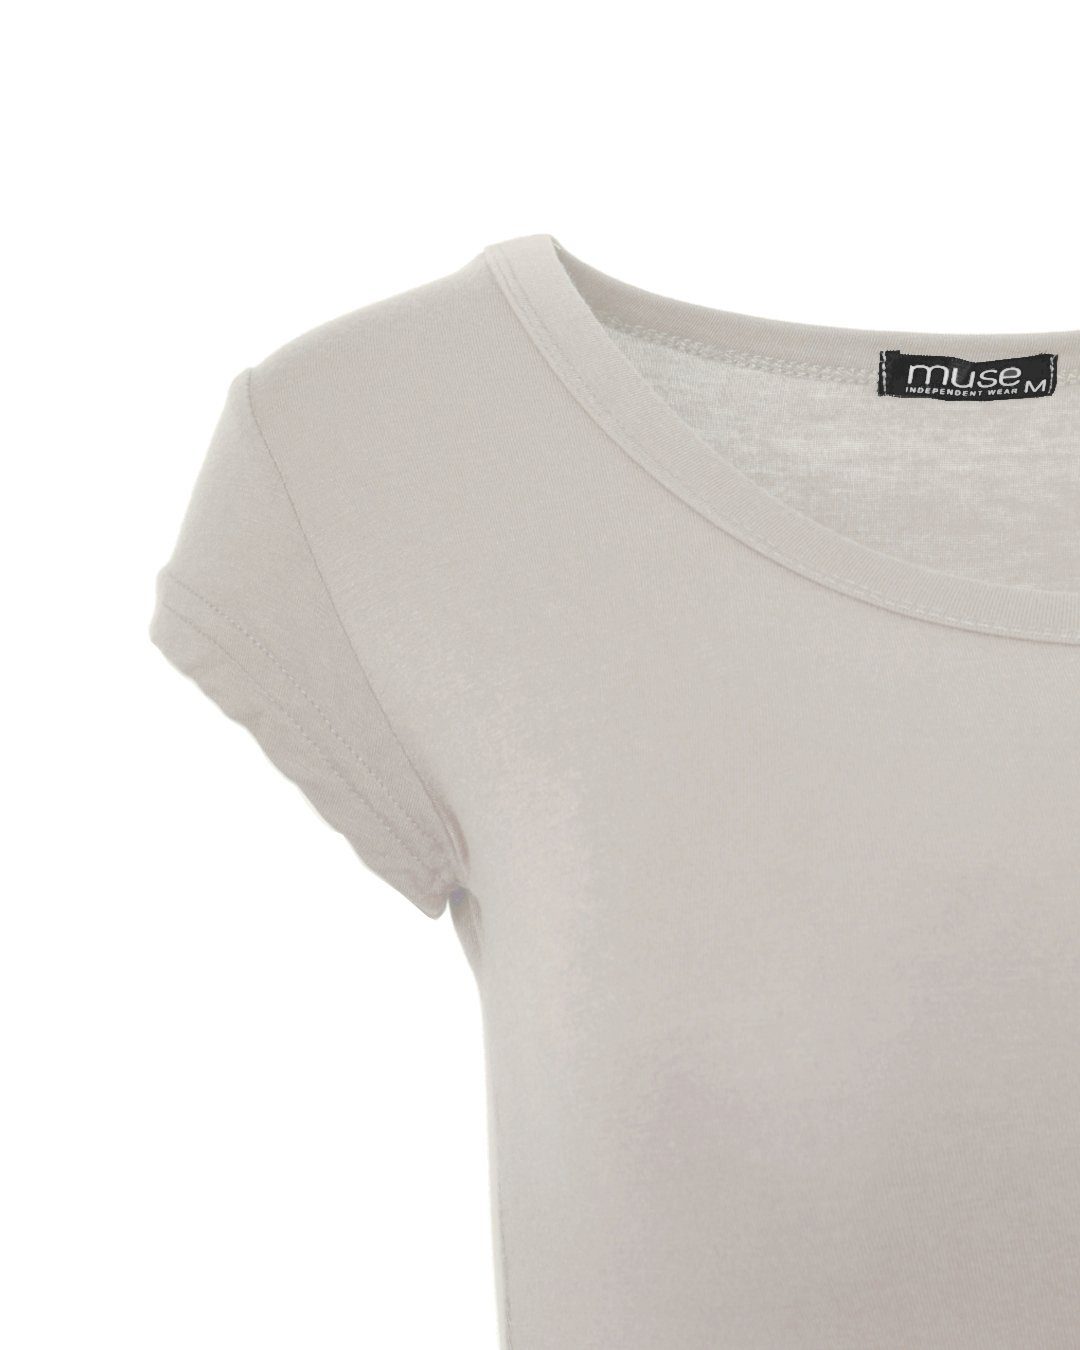 T-Shirt T-Shirt beige Kurzarm 1001 Basic Muse Fit Skinny